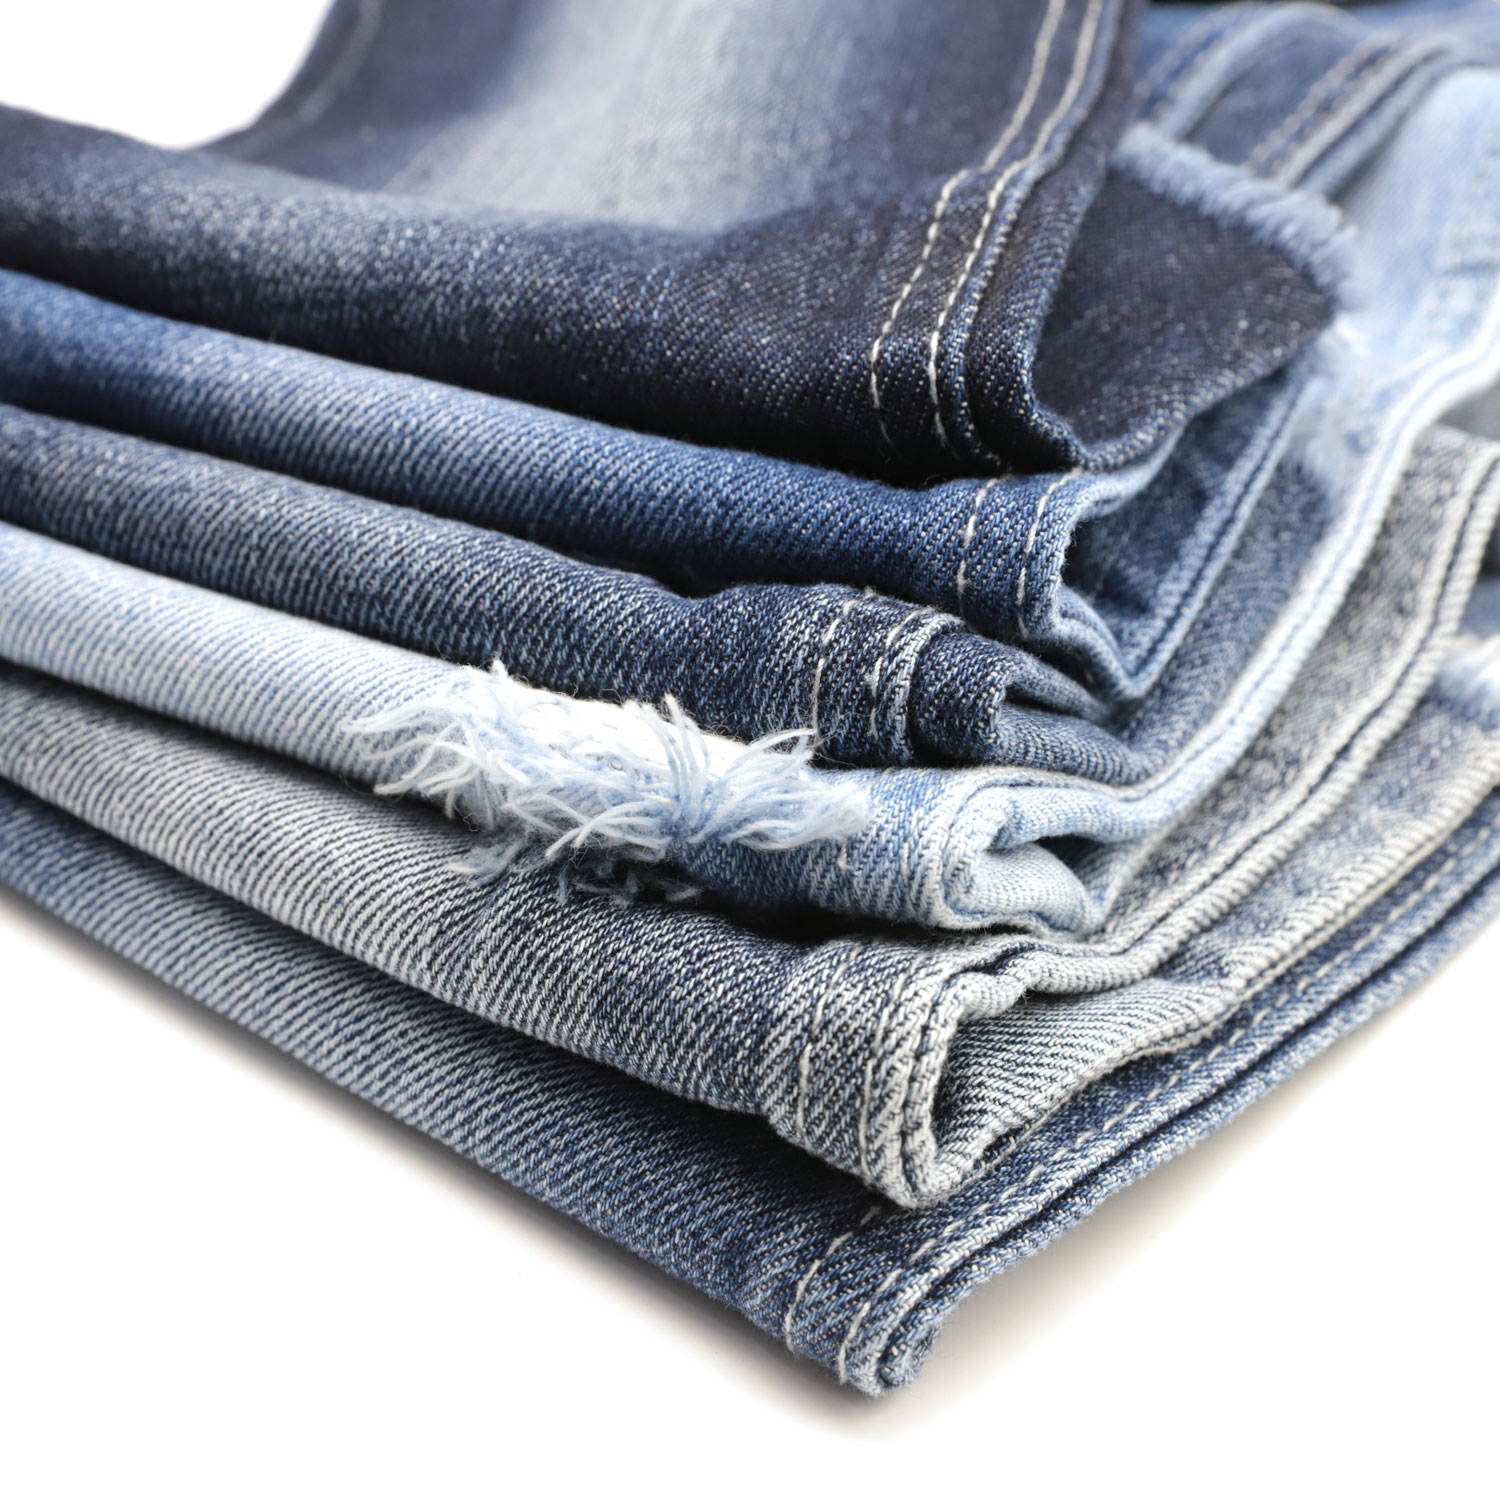 Is It Okay to Dry Denim Jeans in the Dryer on Low Heat? 1